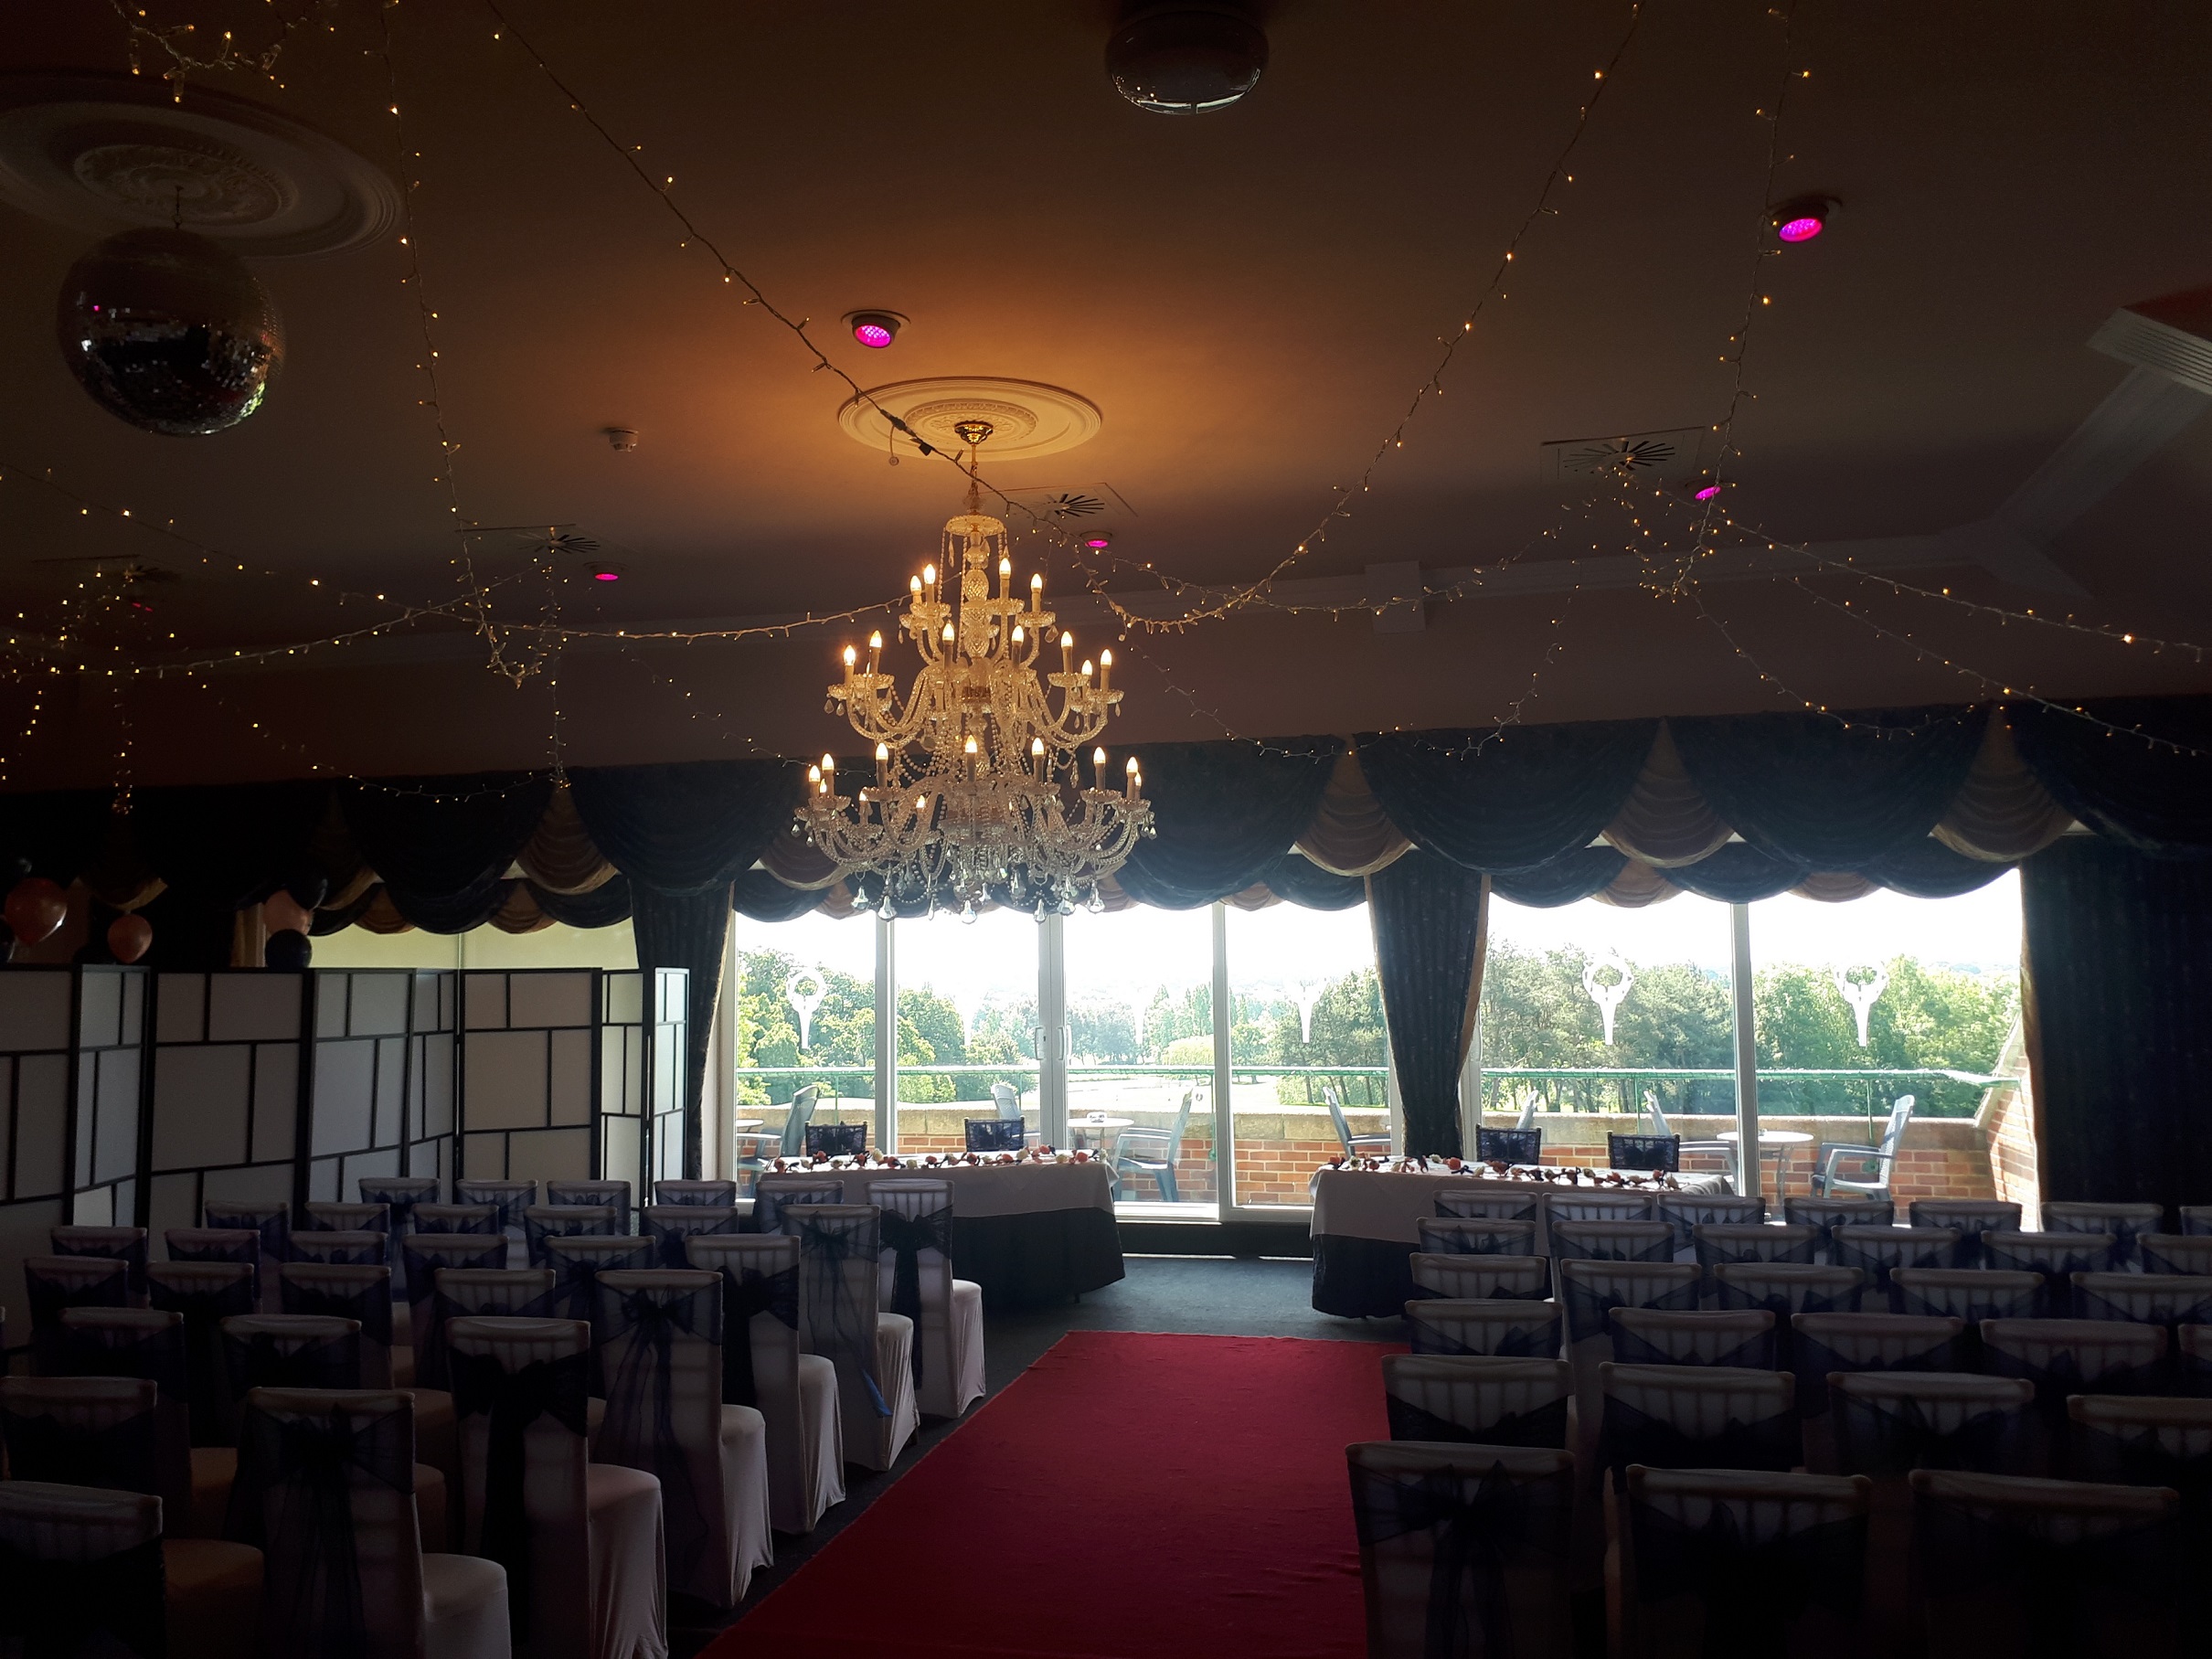 Dudsbury Golf Club ceremony room chandelier 